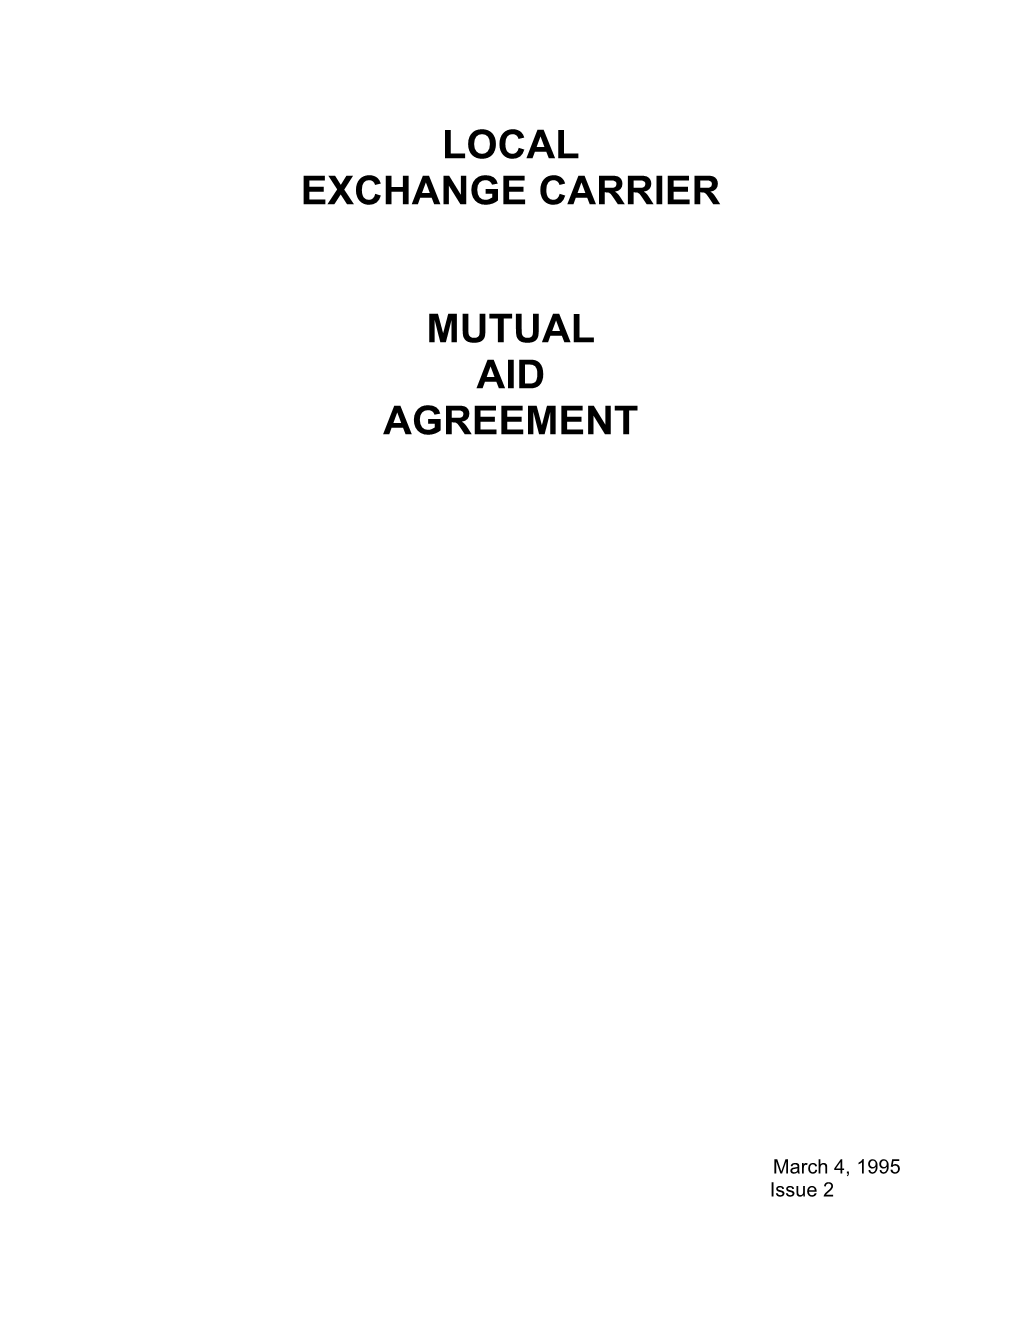 Exchange Carrier